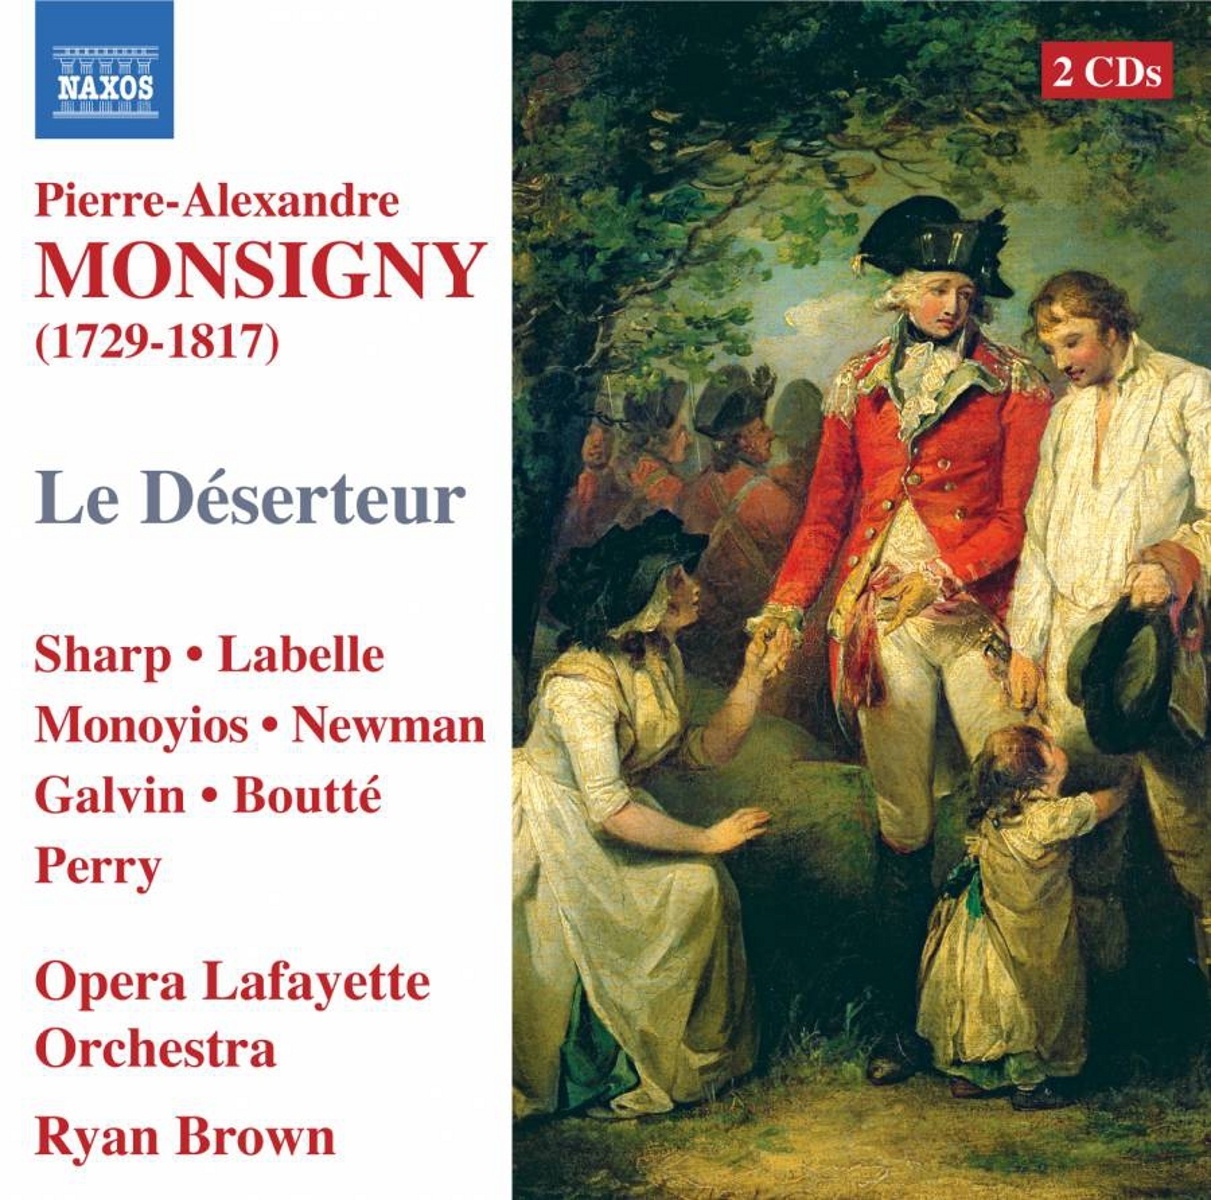 Le Deserteur - Brown  Sharp  Labelle  Opera Lafayette. (CD)